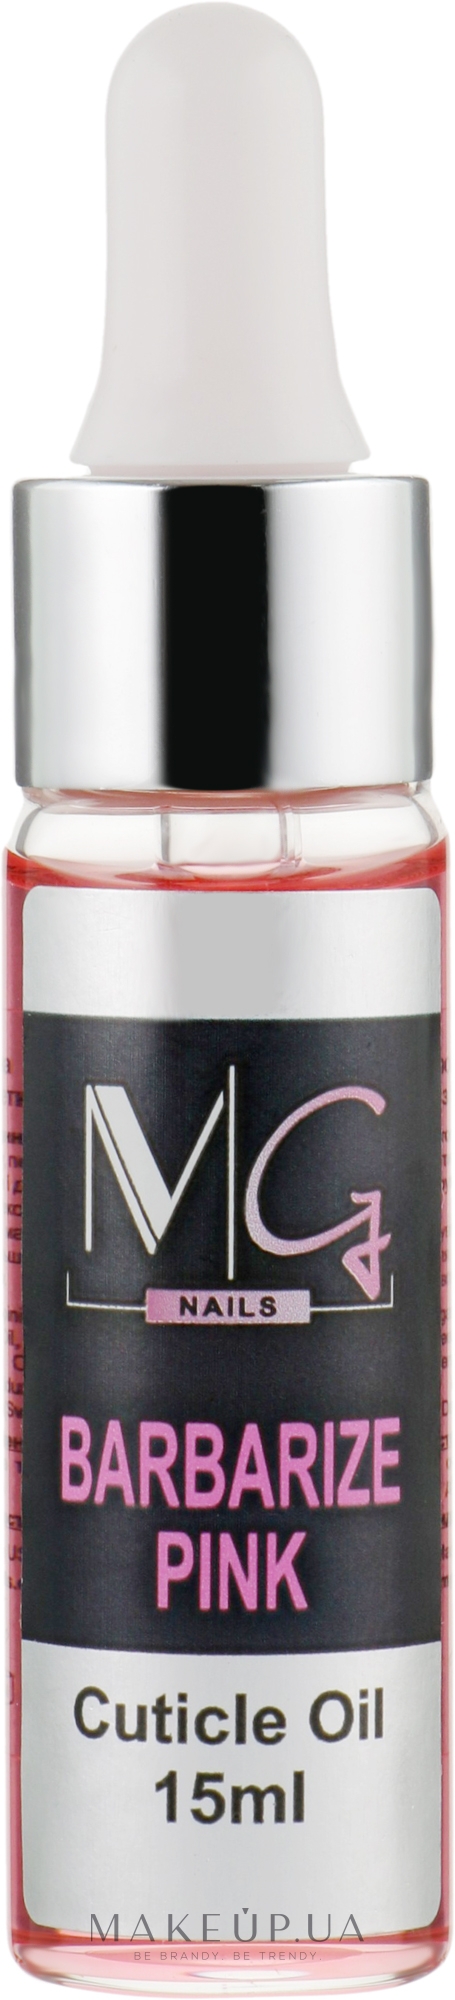 Олія для кутикули з піпеткою - MG Nails Barbarize Pink Cuticle Oil — фото 15ml